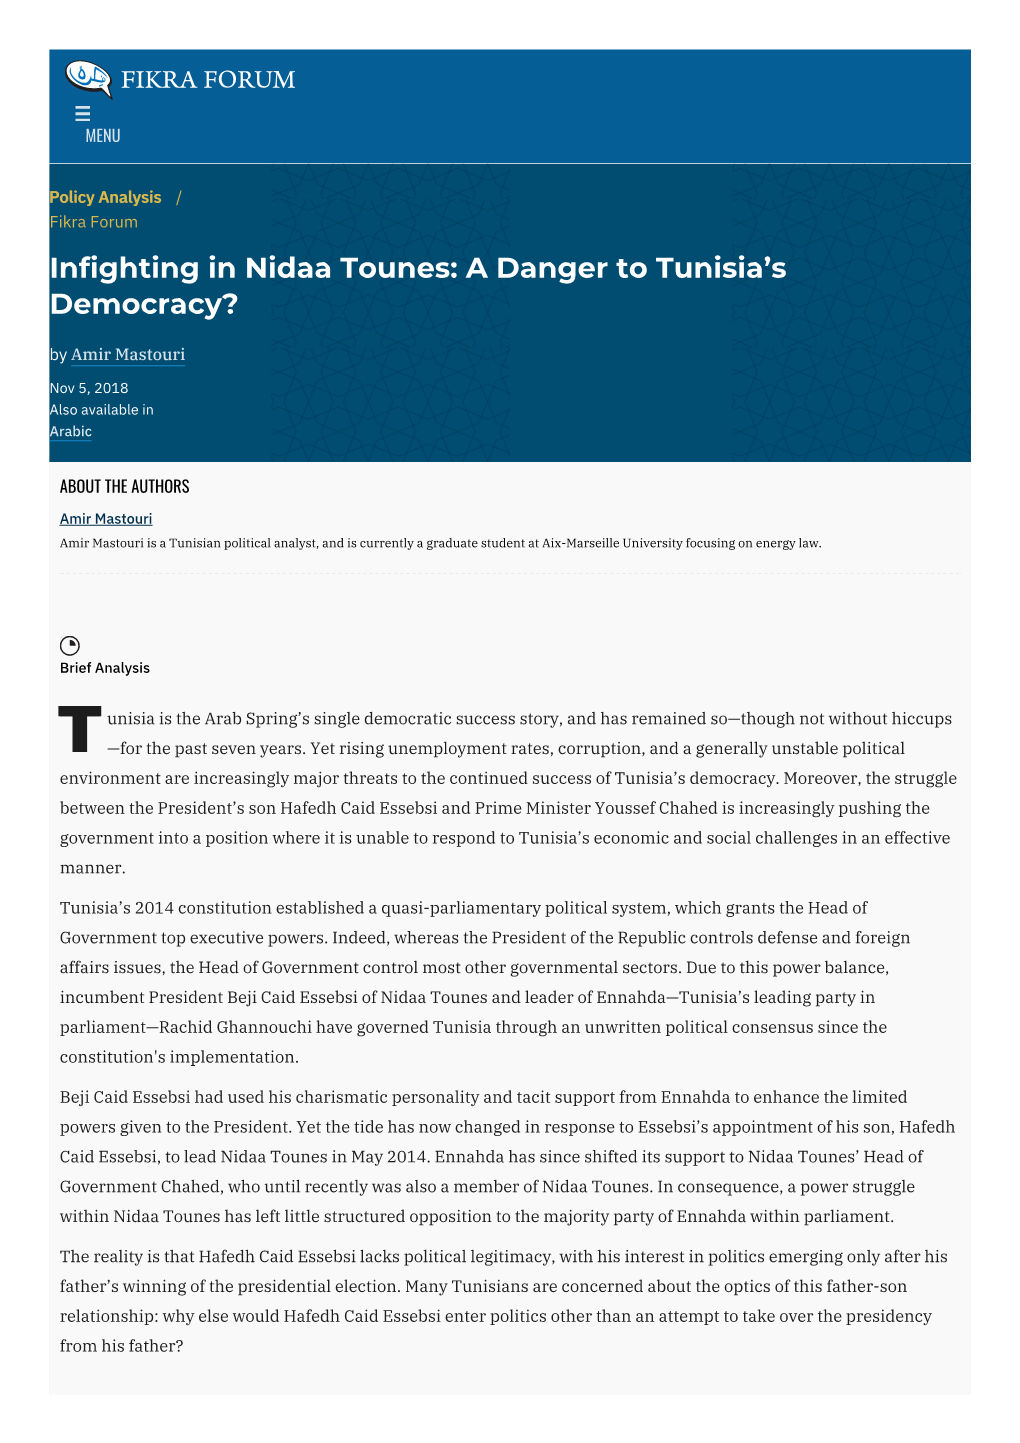 Infighting in Nidaa Tounes: a Danger to Tunisia's Democracy? | The